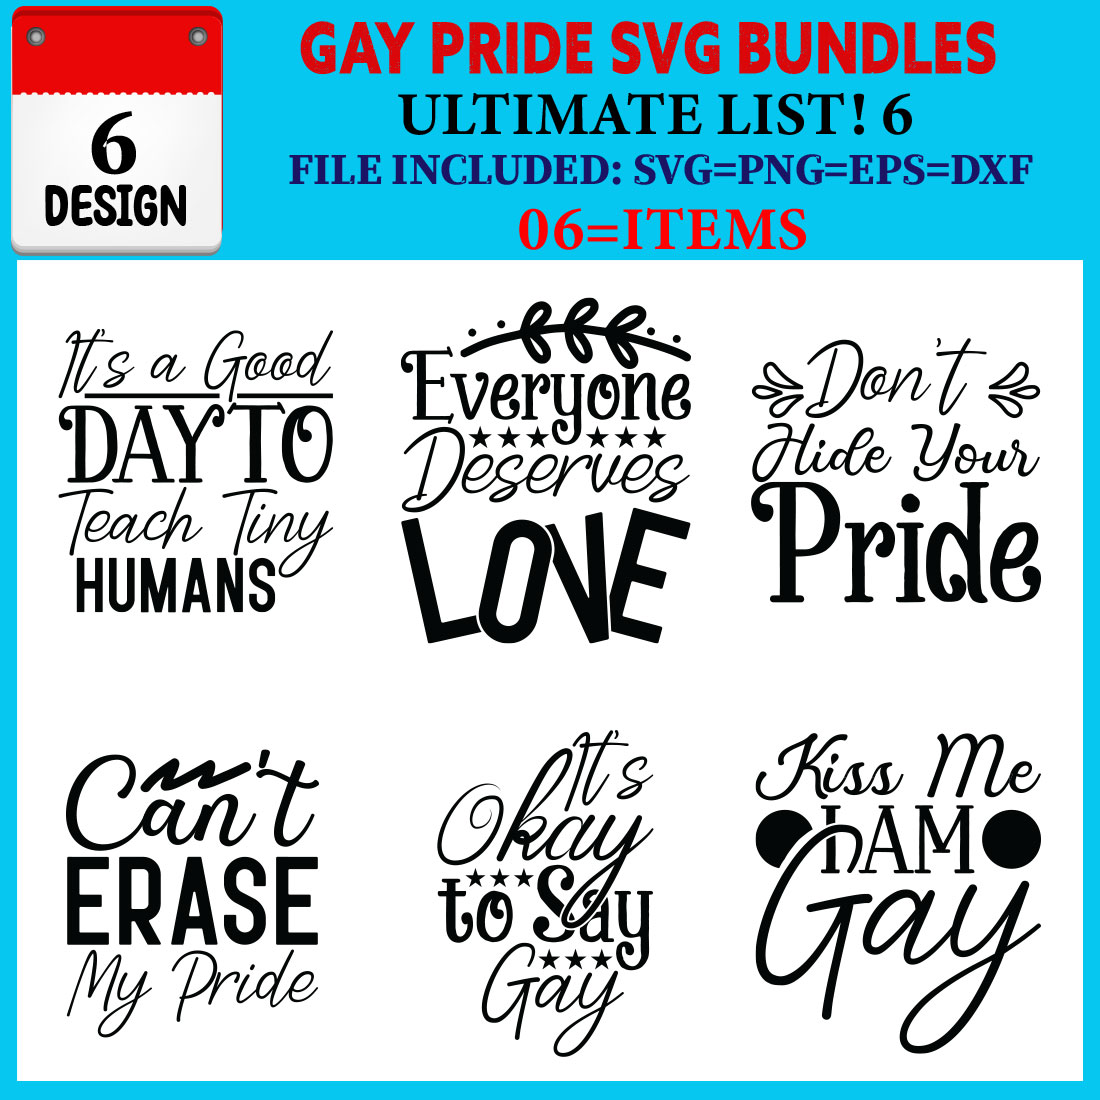 Gay Pride T-shirt Design Bundle Vol-03 cover image.